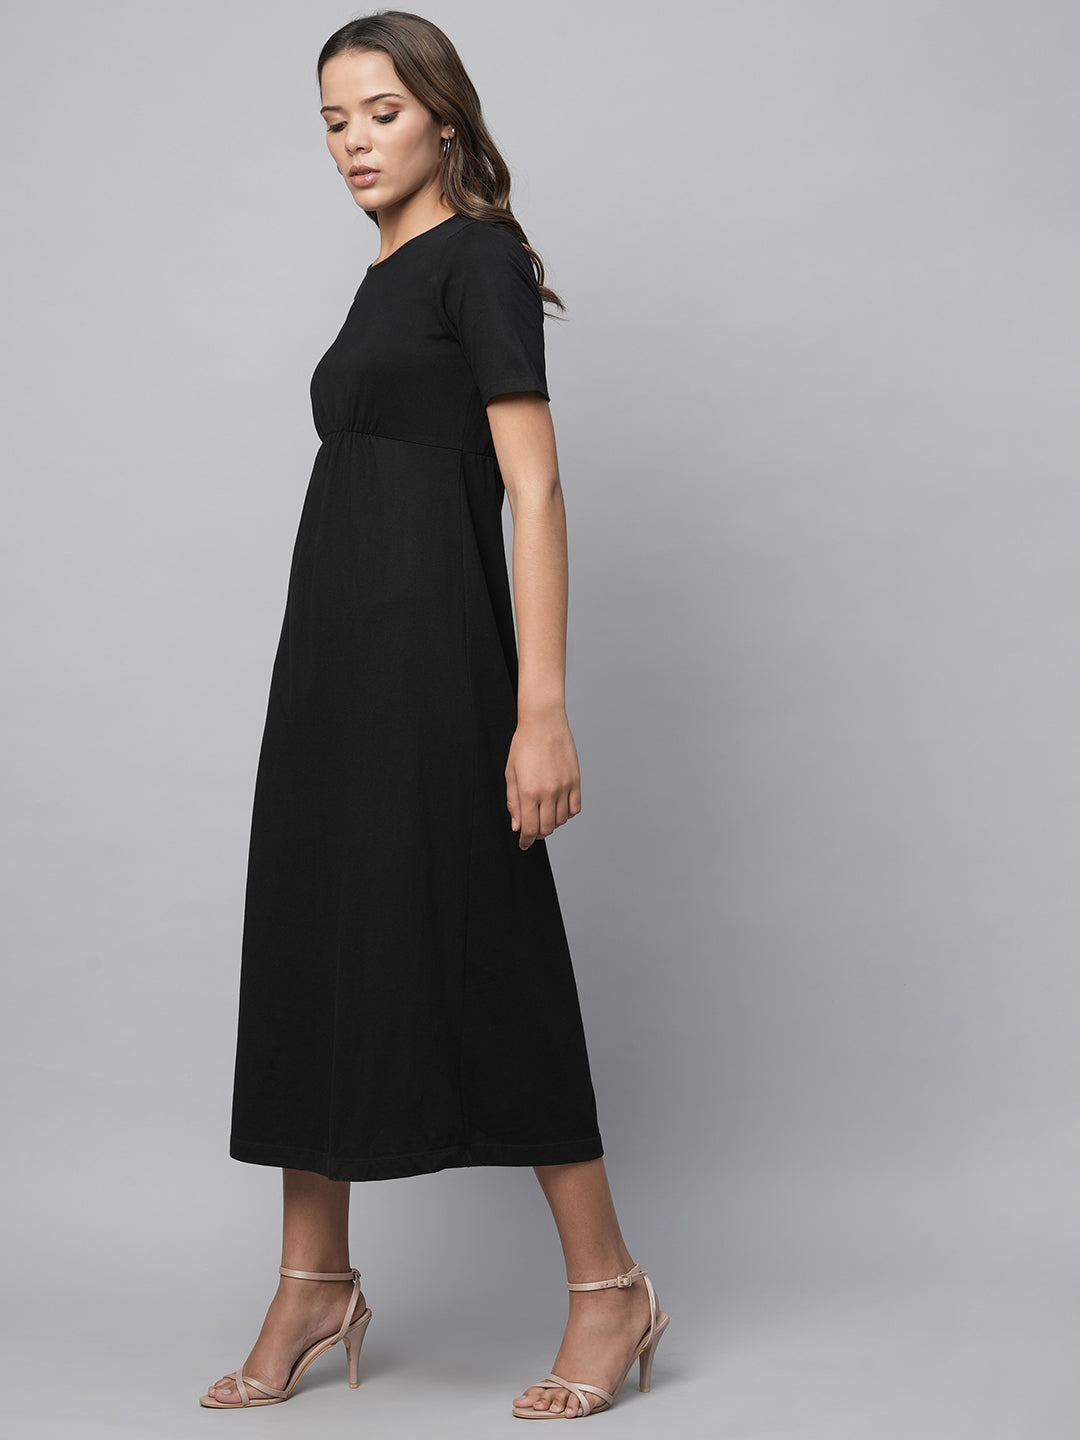 Cotton Jersey Basque Midi Length Black Dress